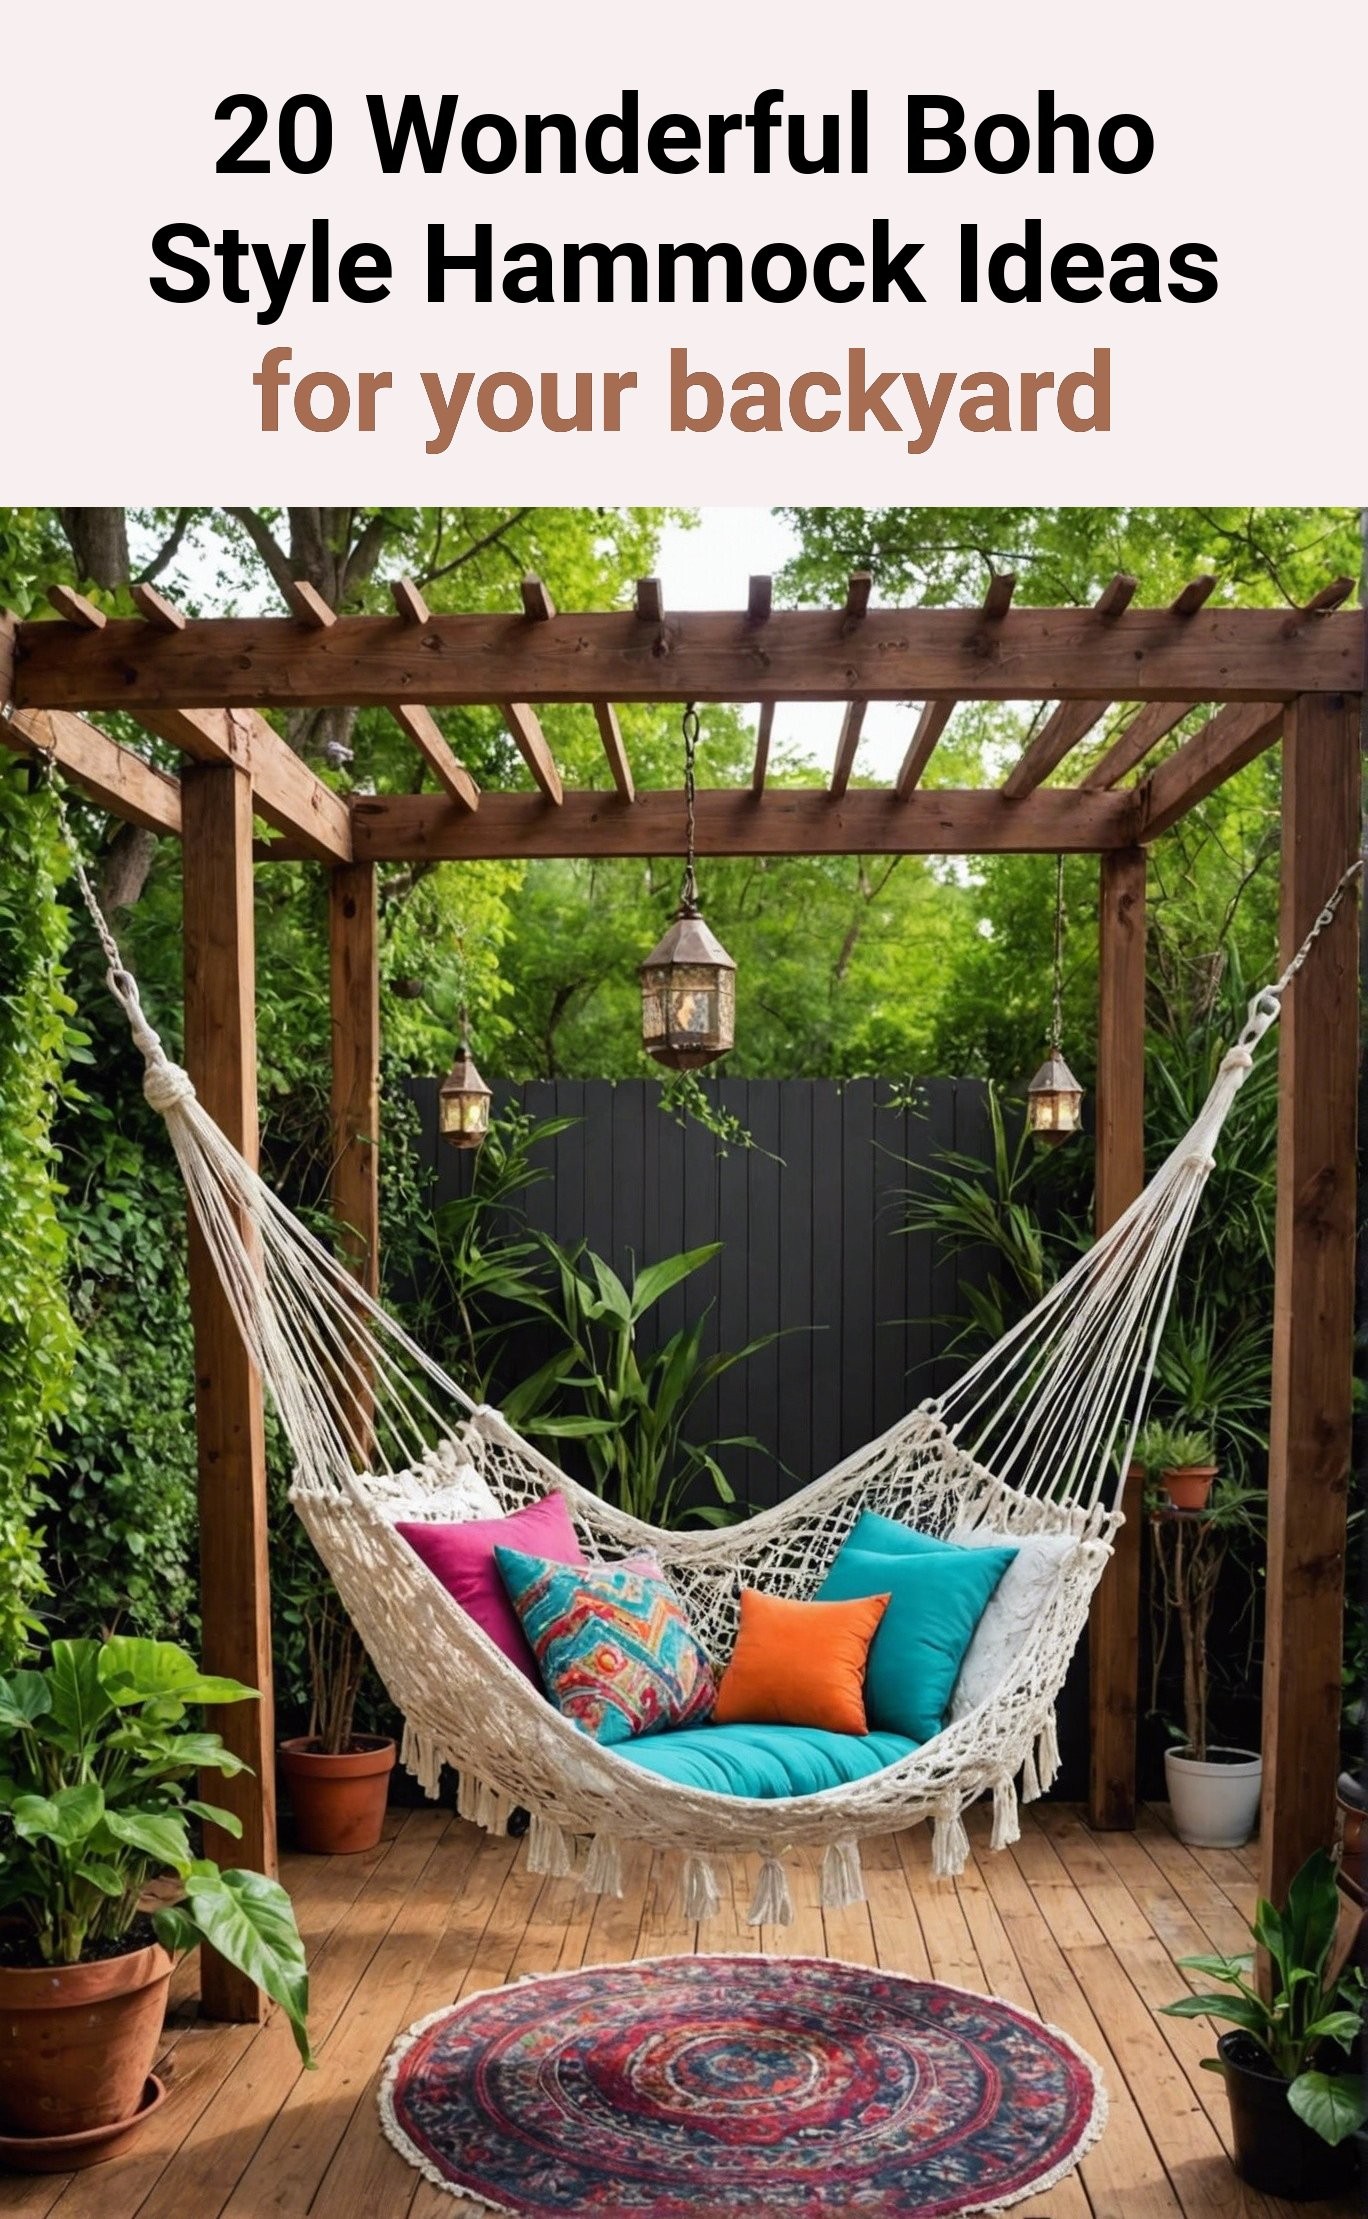 20 Wonderful Boho Style Hammock Ideas for your backyard